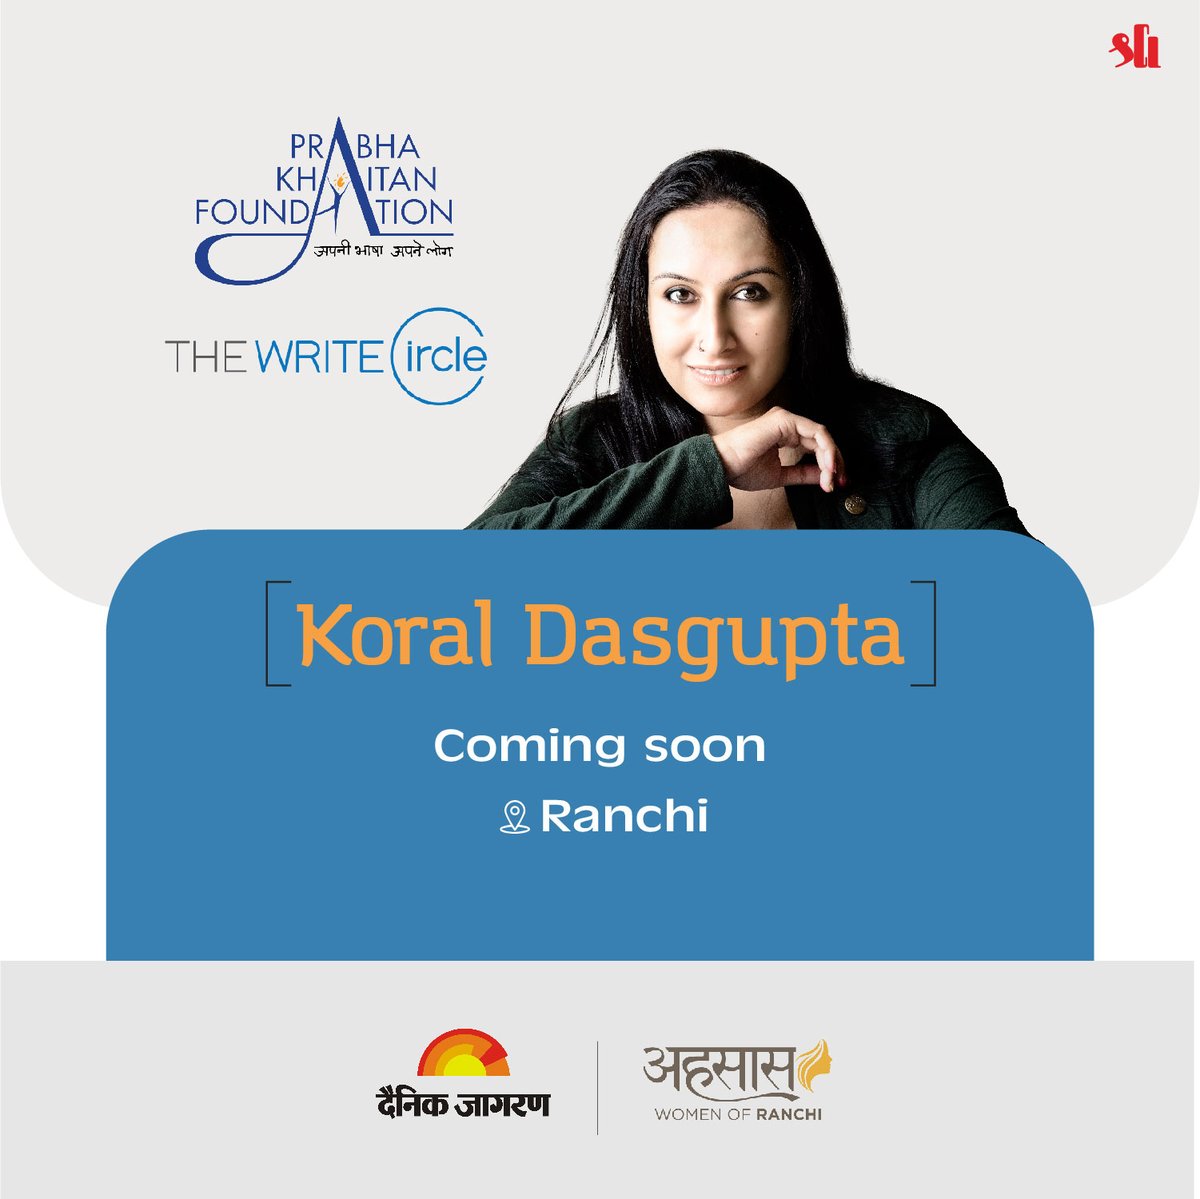 We look forward to having author @KoralDasgupta in the next session of @write_circle in #Ranchi. Stay tuned for further updates! @JagranNews @ehsaaswomen #KoralDasgupta